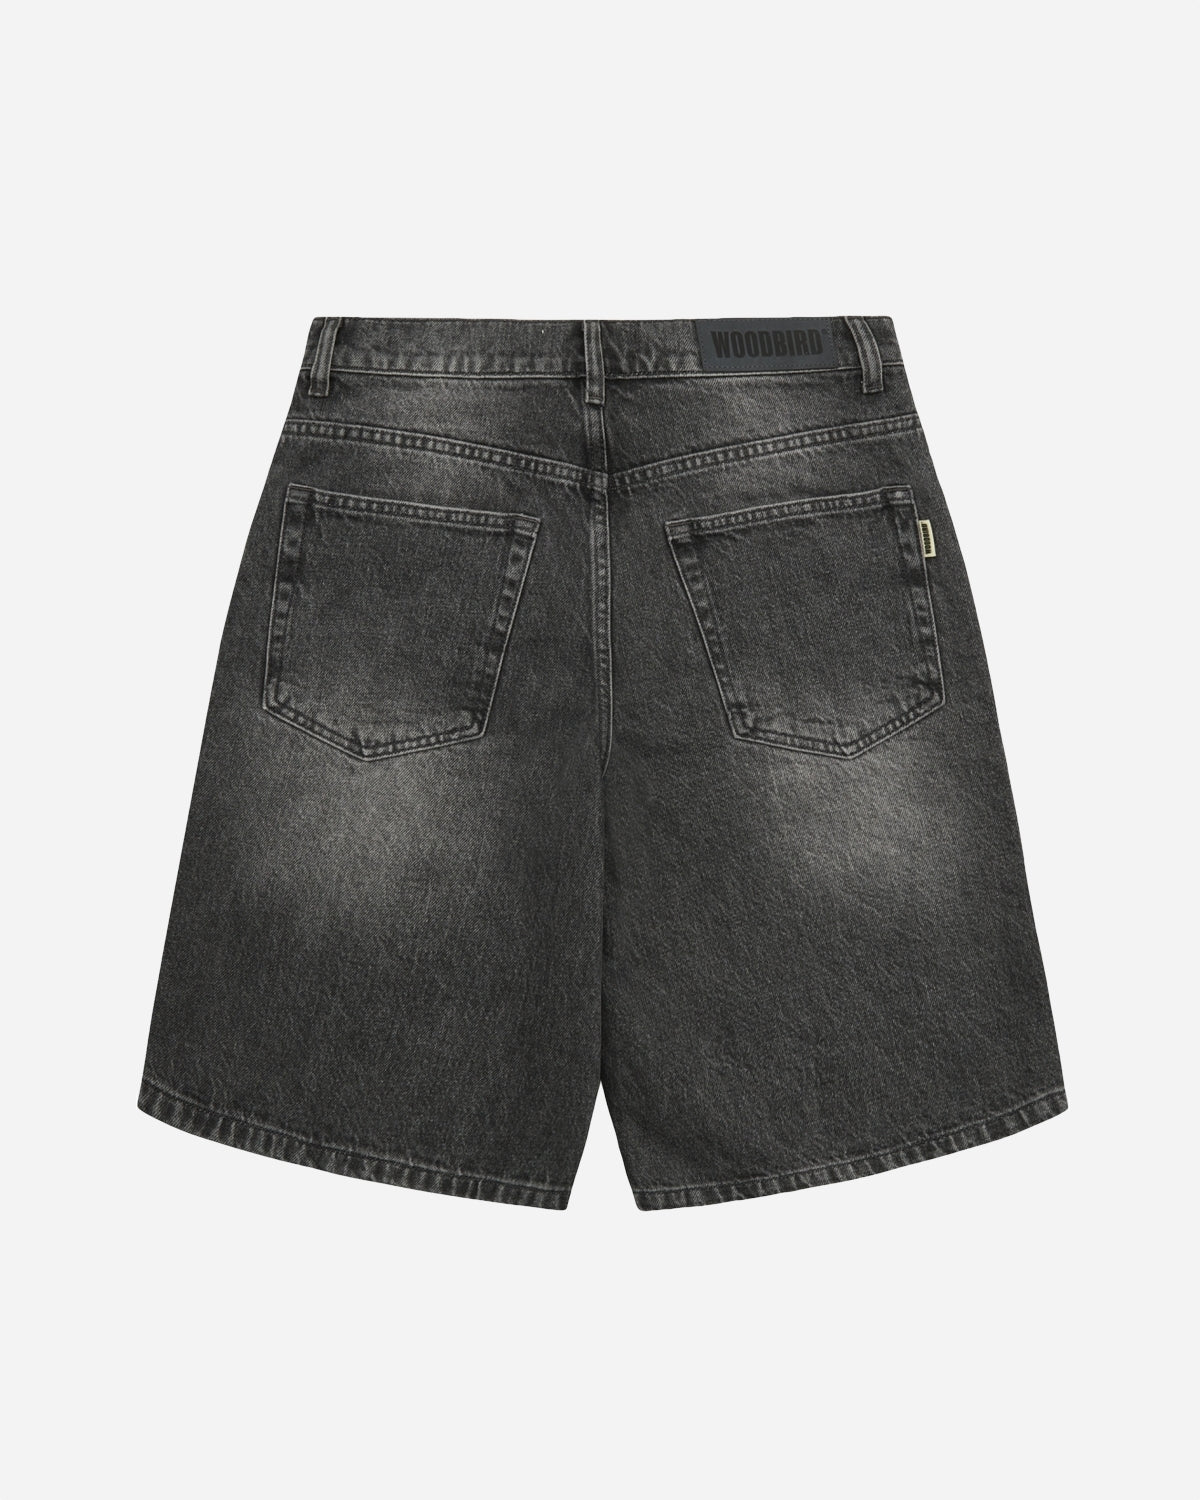 Rami Eclipse Shorts - Grey / Black